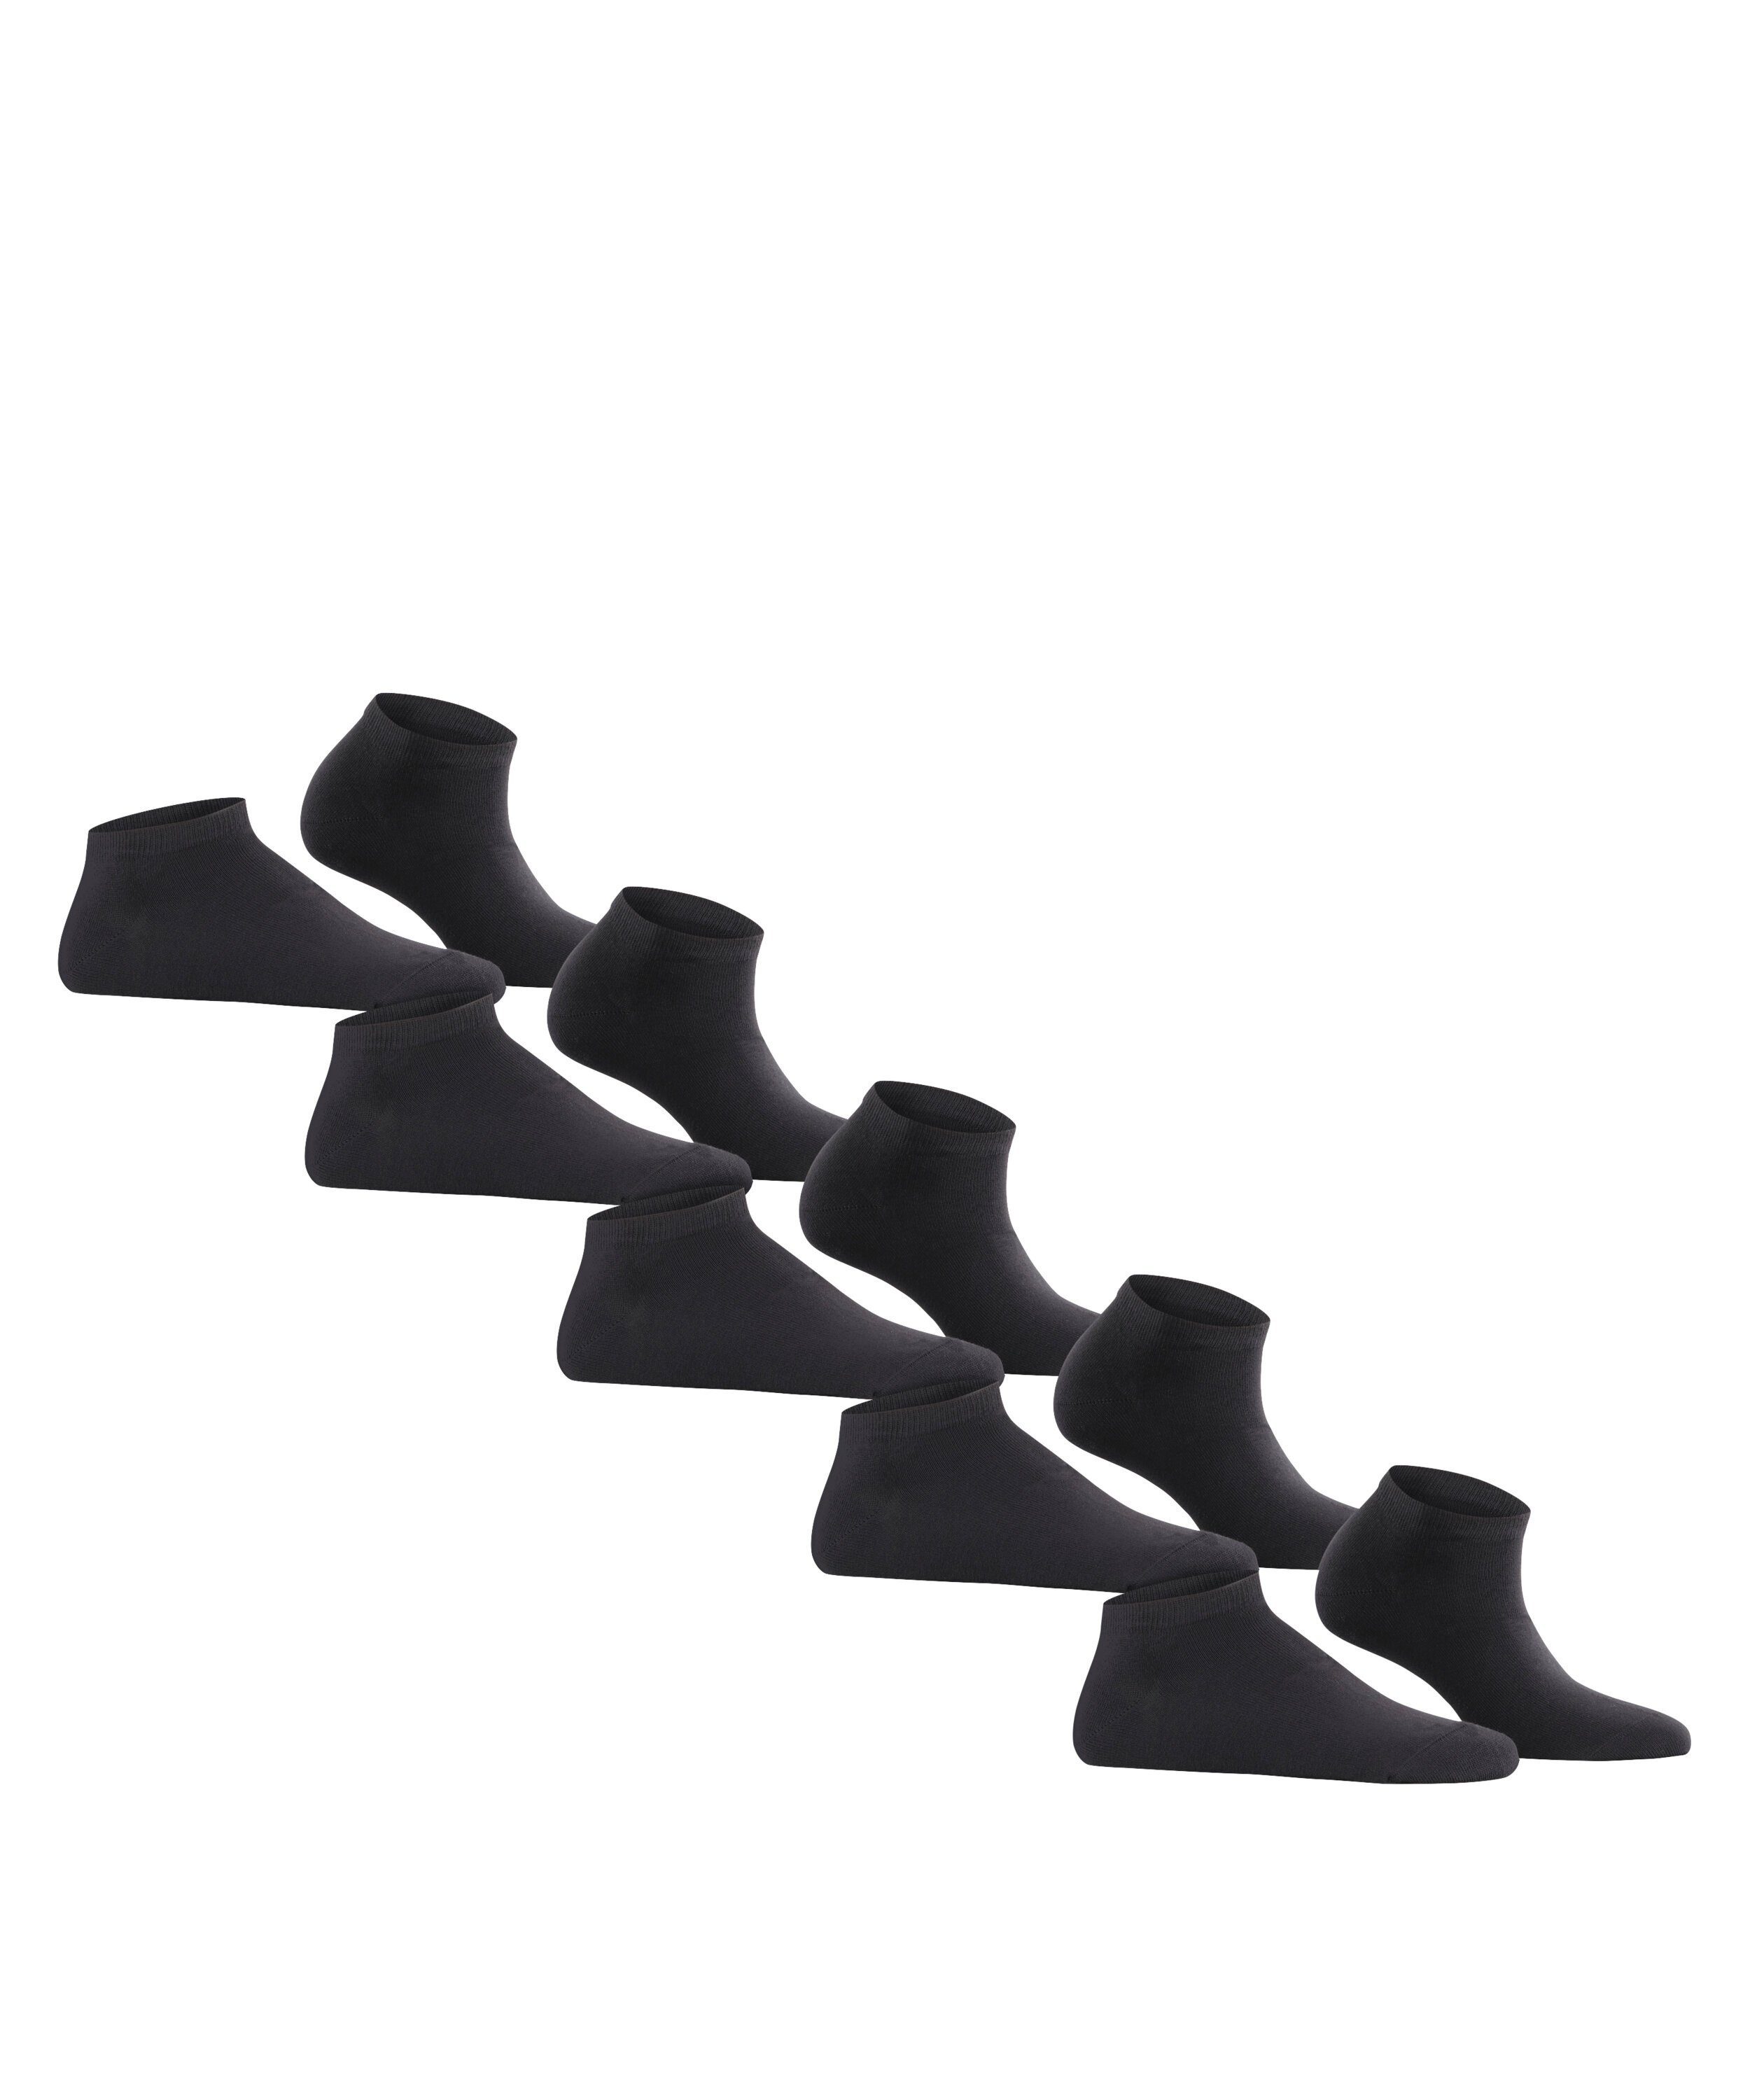 fits black Esprit (3000) Sneakersocken (5-Paar) size Solid 36-41) all (Gr. One 5-Pack